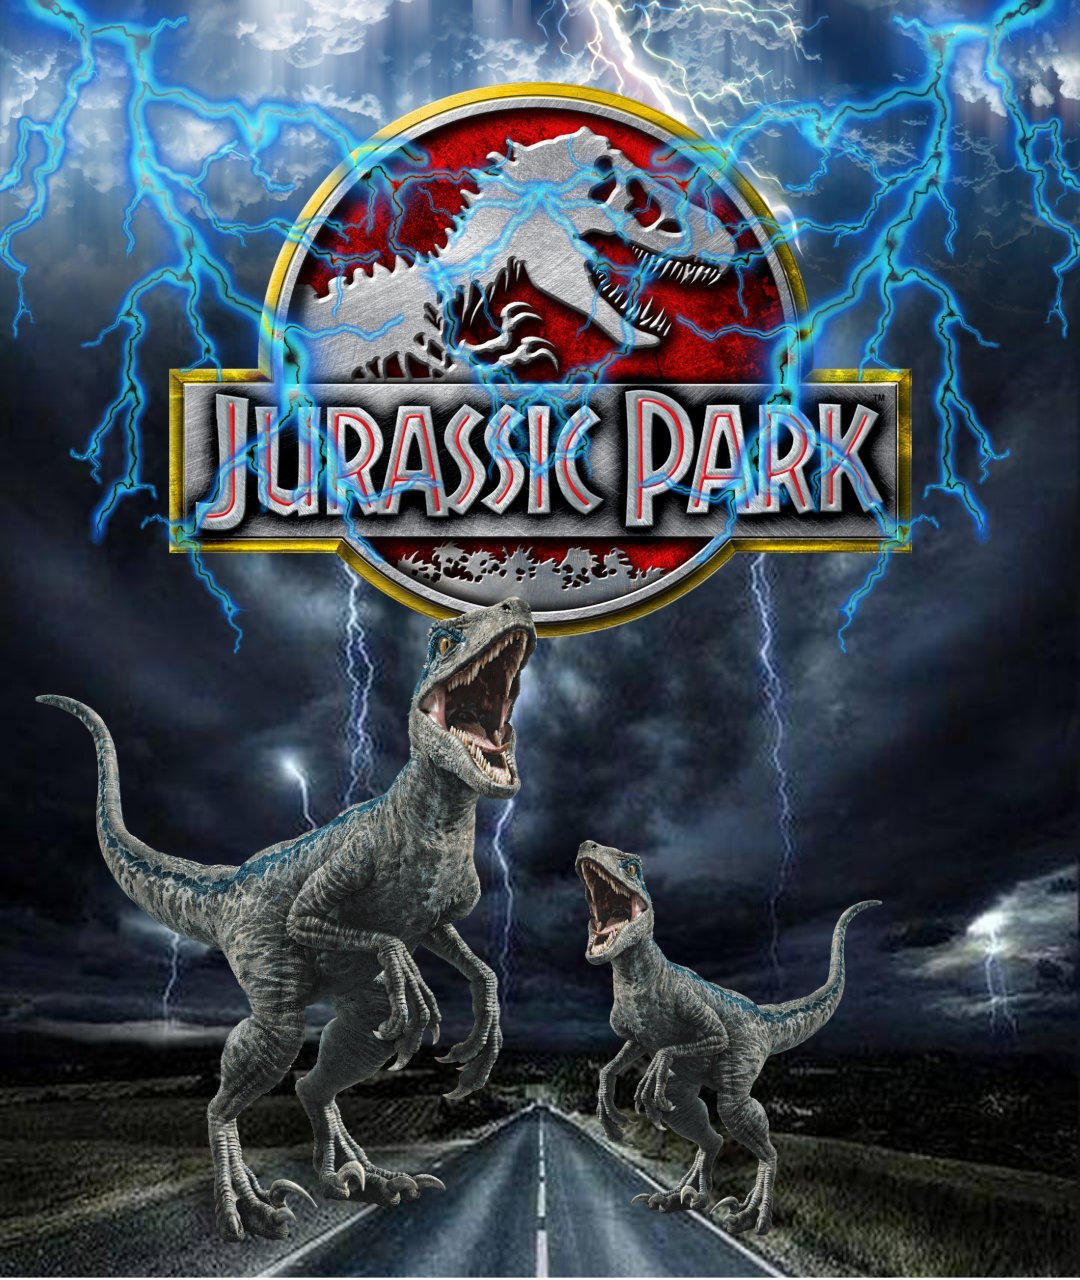 dinossauros do jurassic park para festa infantil